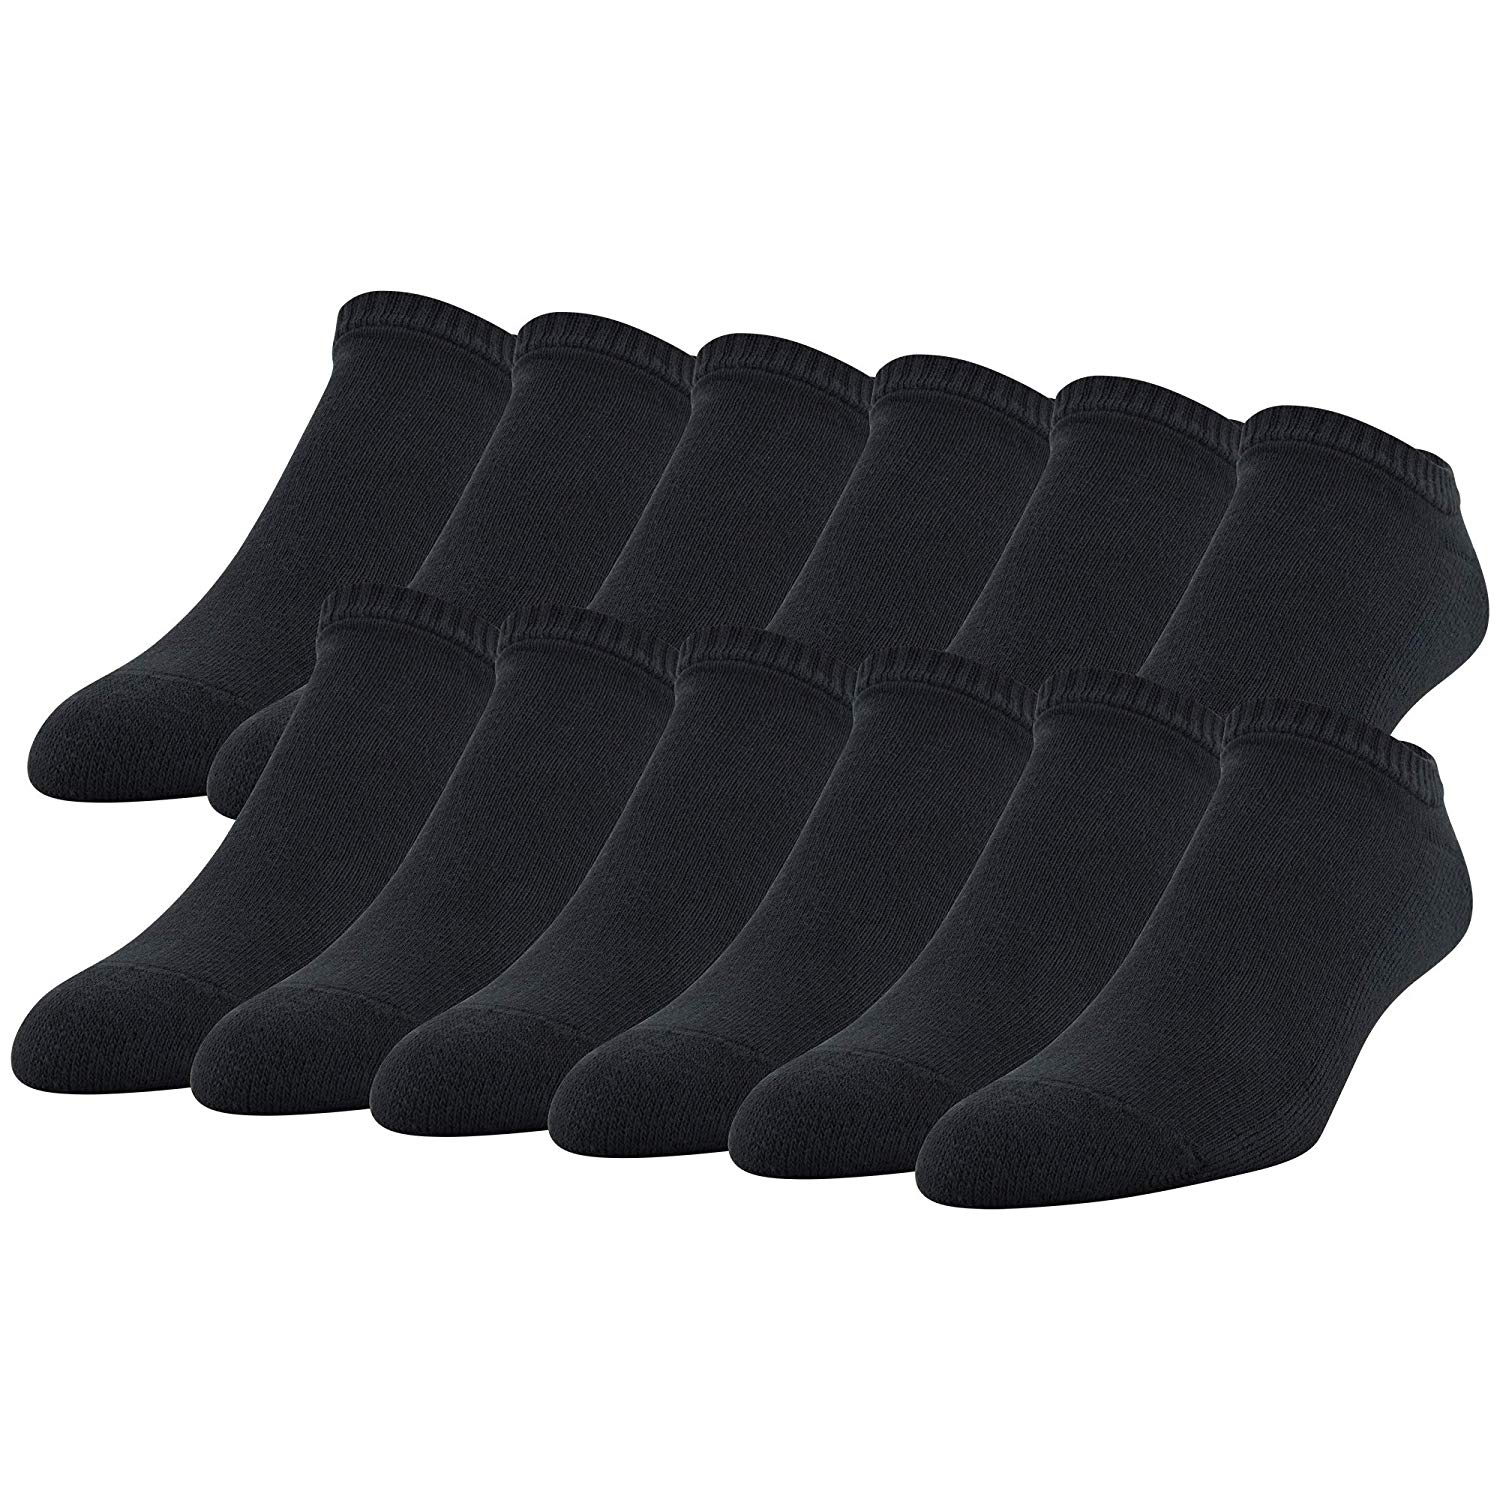 Gildan Men's Stretch Cotton Half Cushion No Show Socks,, Black, Size 6. ...